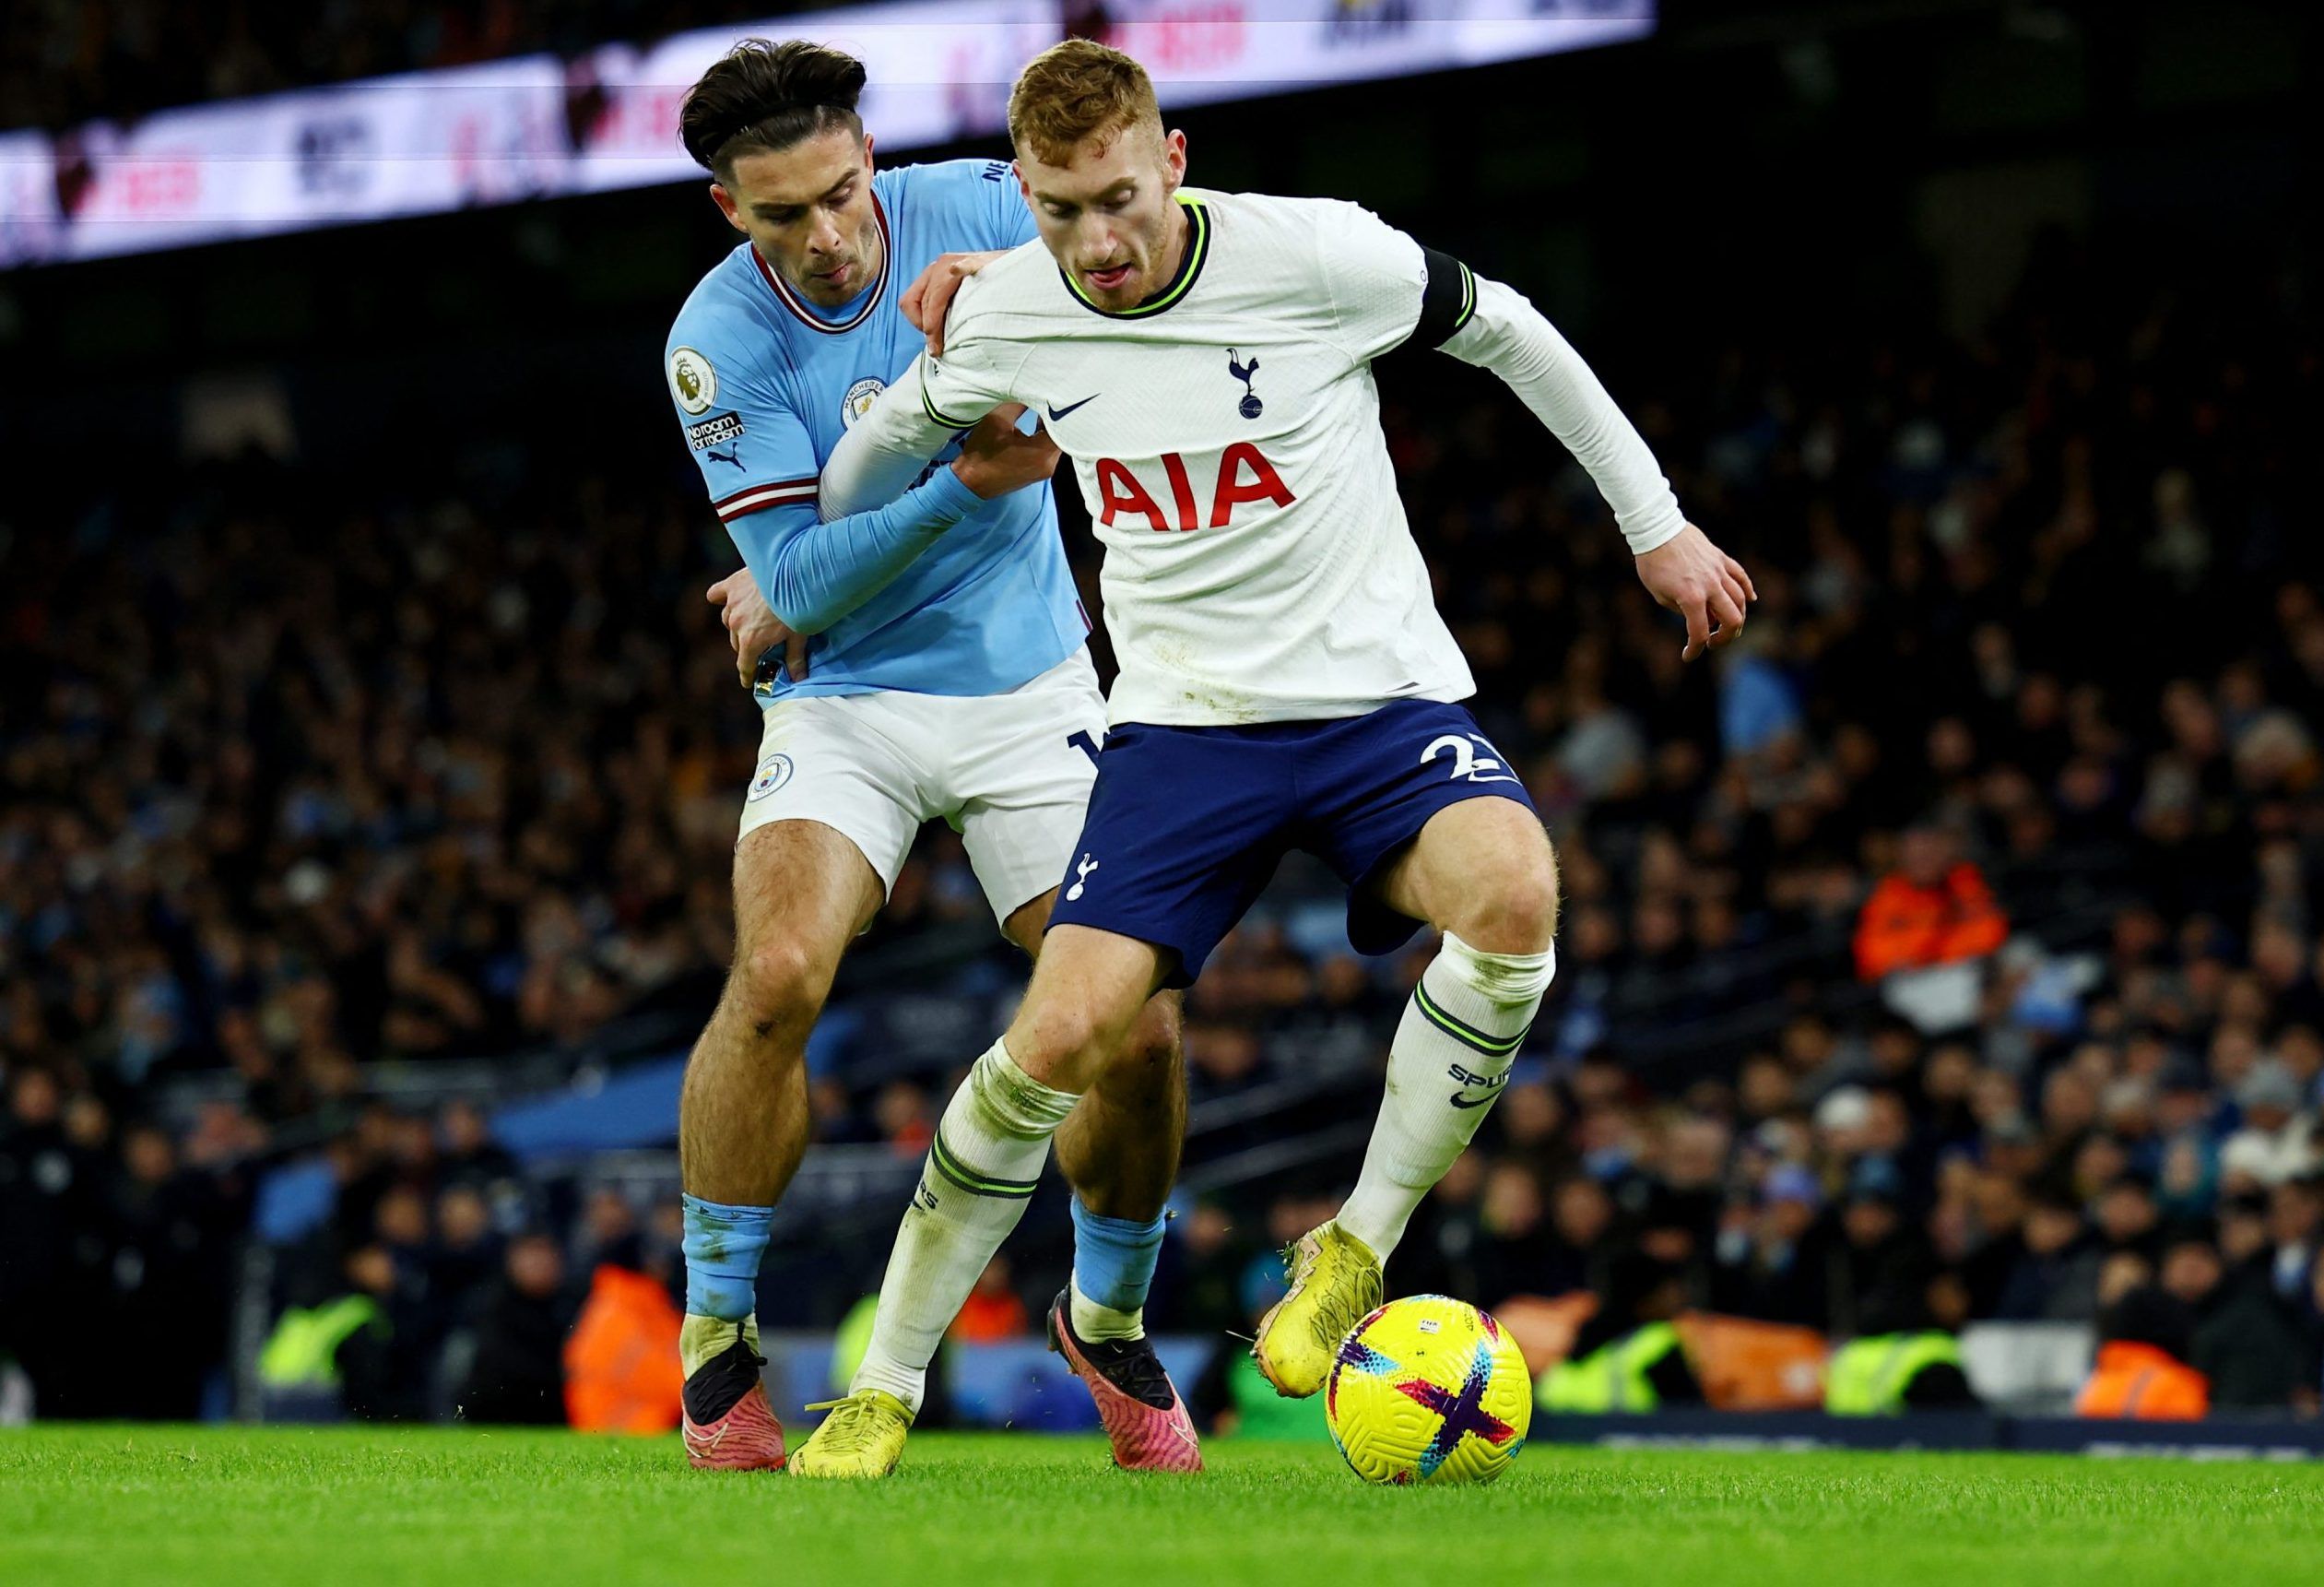 Manchester City's Jack Grealish in action with Tottenham Hotspur's Dejan Kulusevski